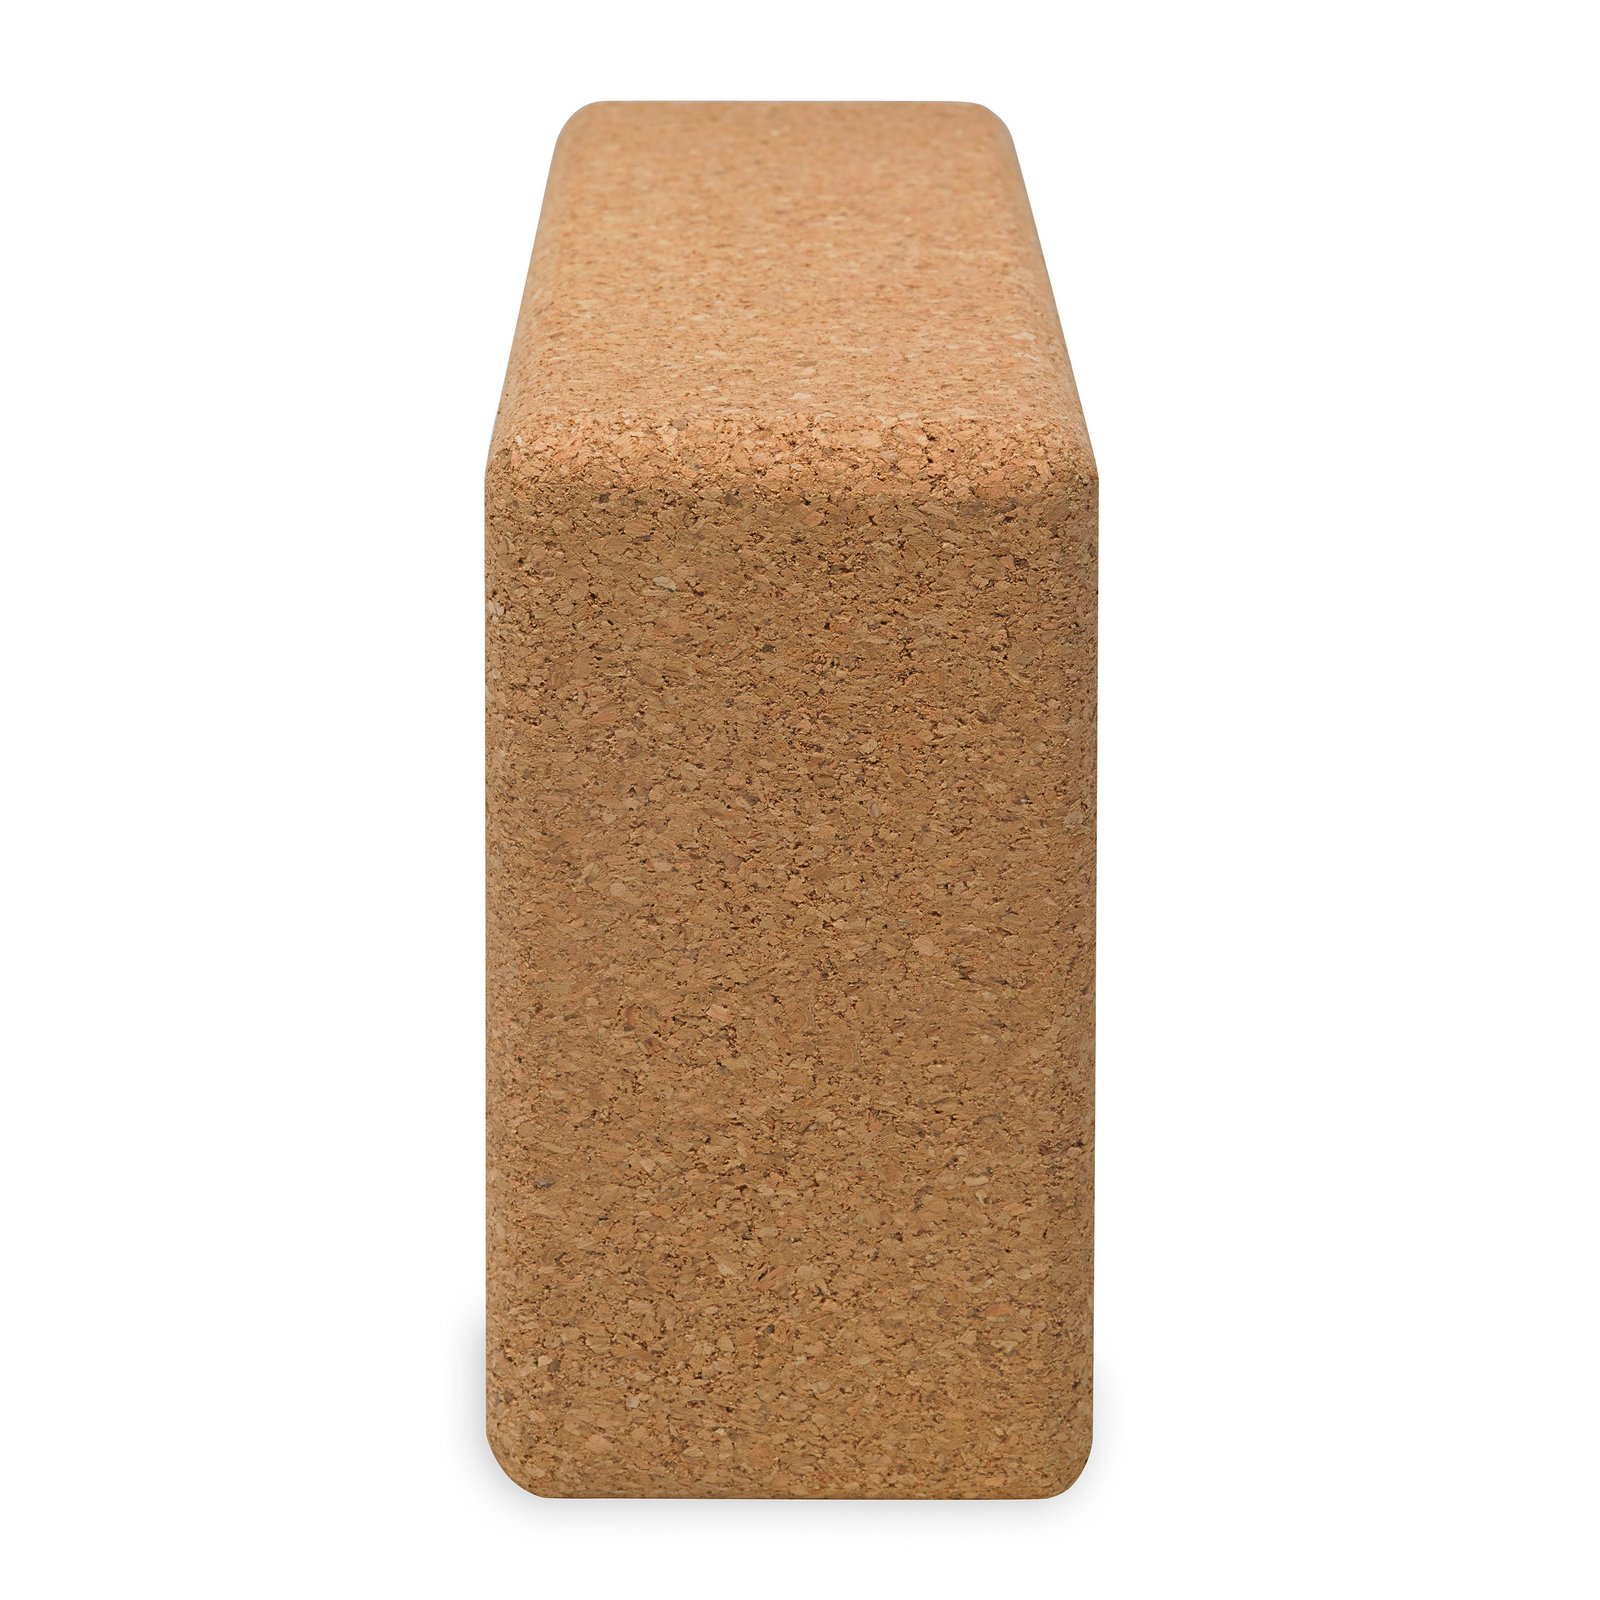 GAIAM Yoga Block Cork Brick